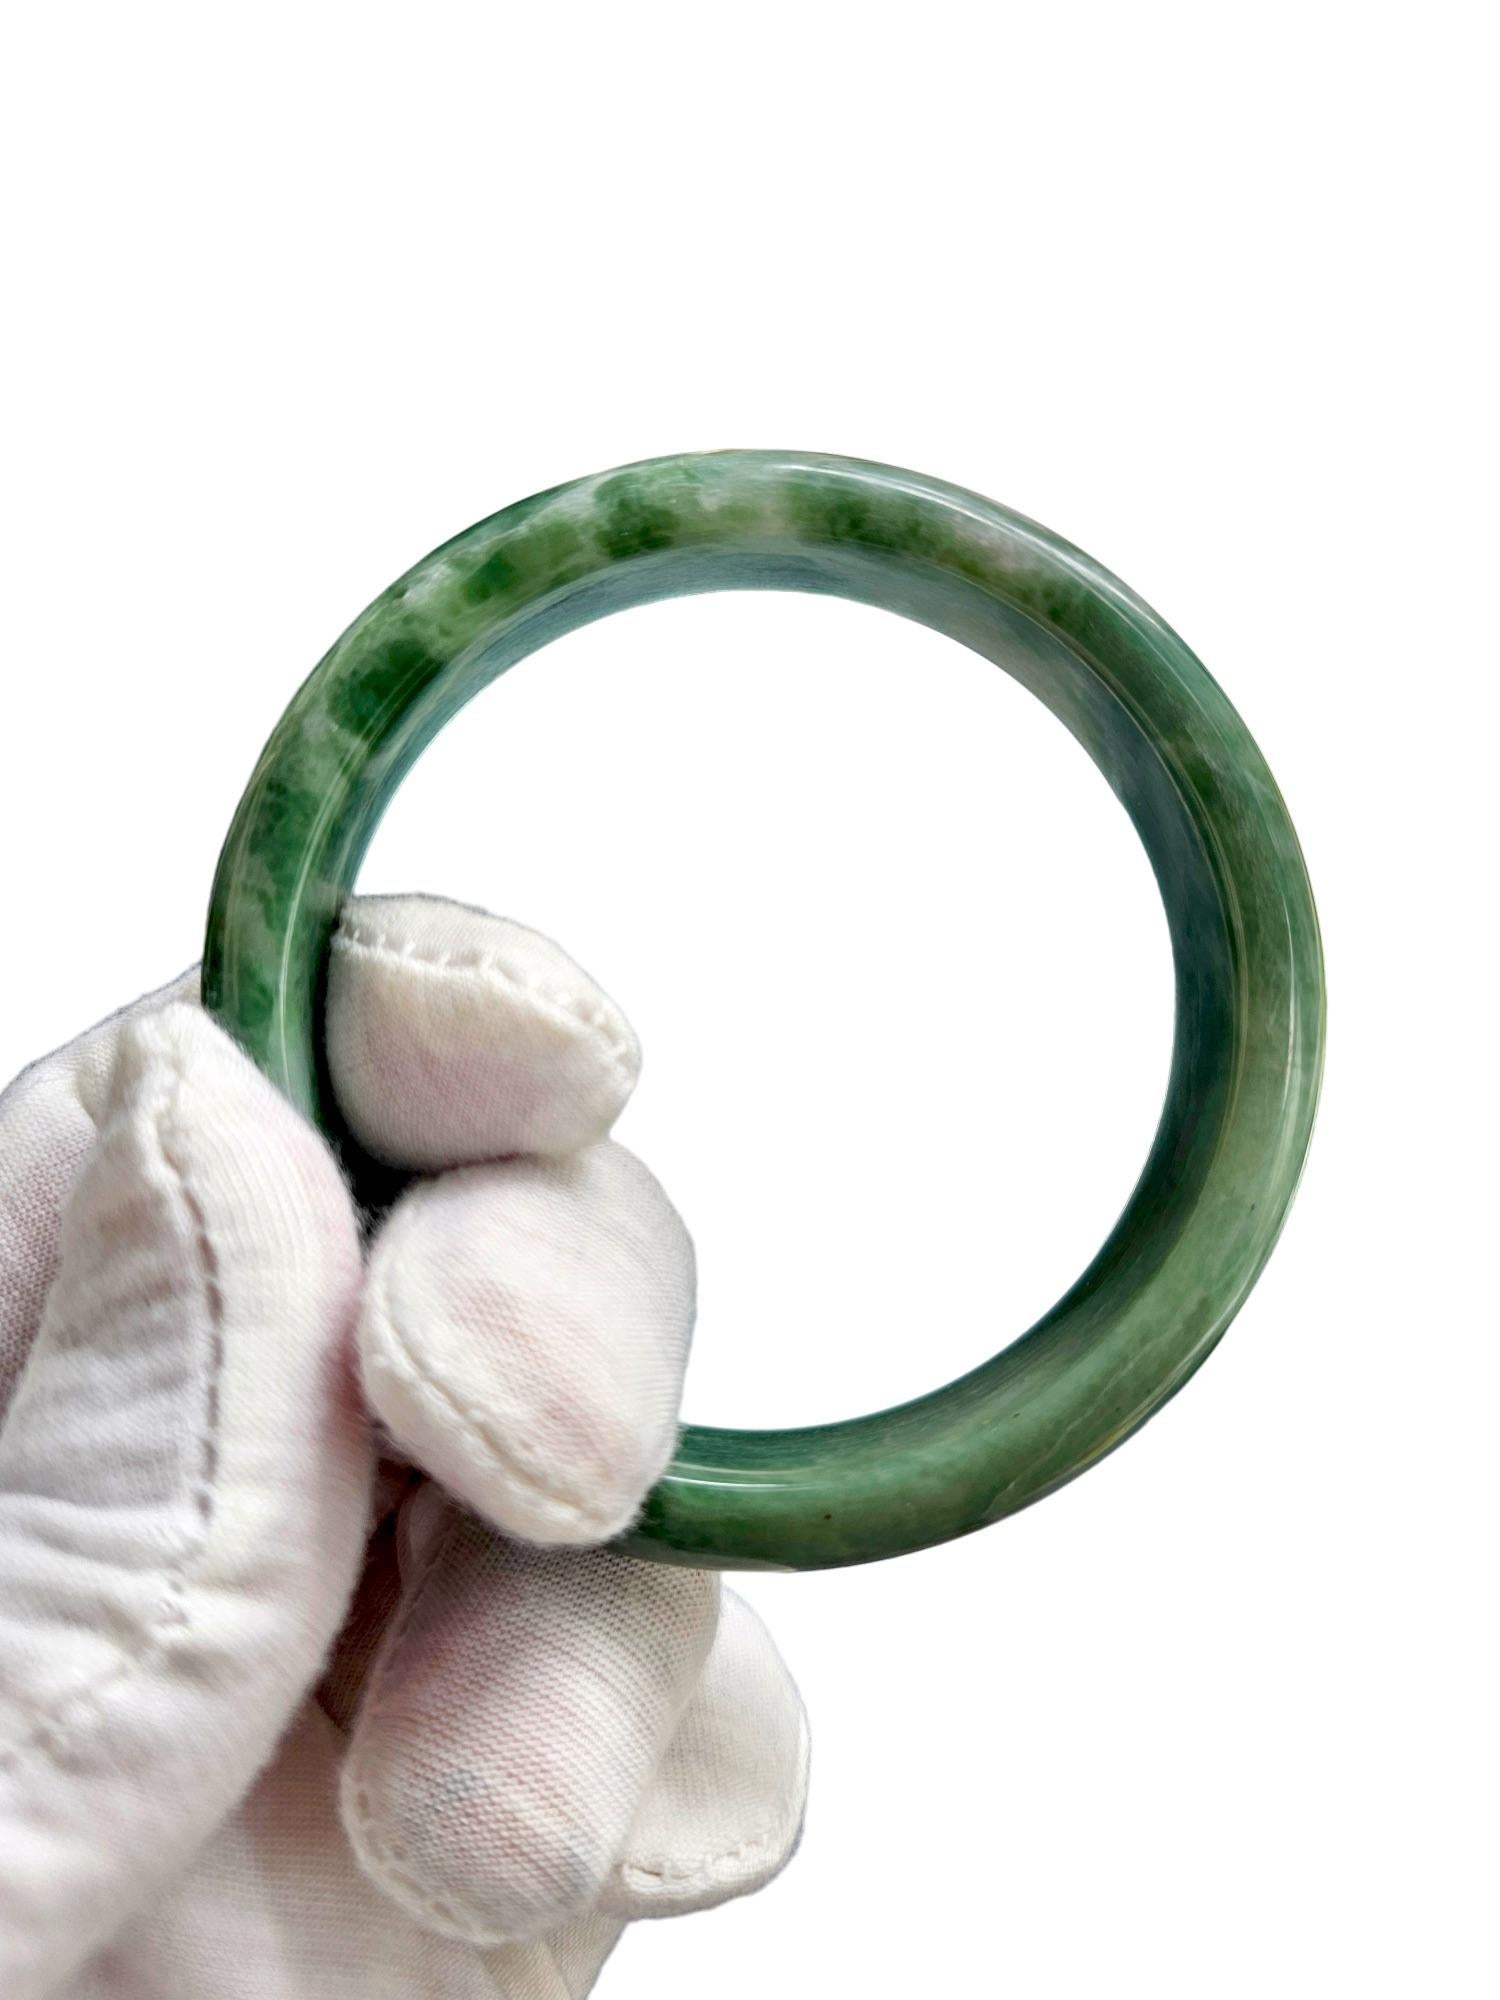 Earth's Burmese A-Jade Bangle Bracelet (MADE IN JAPAN) Green Jadeite 08808 For Sale 1